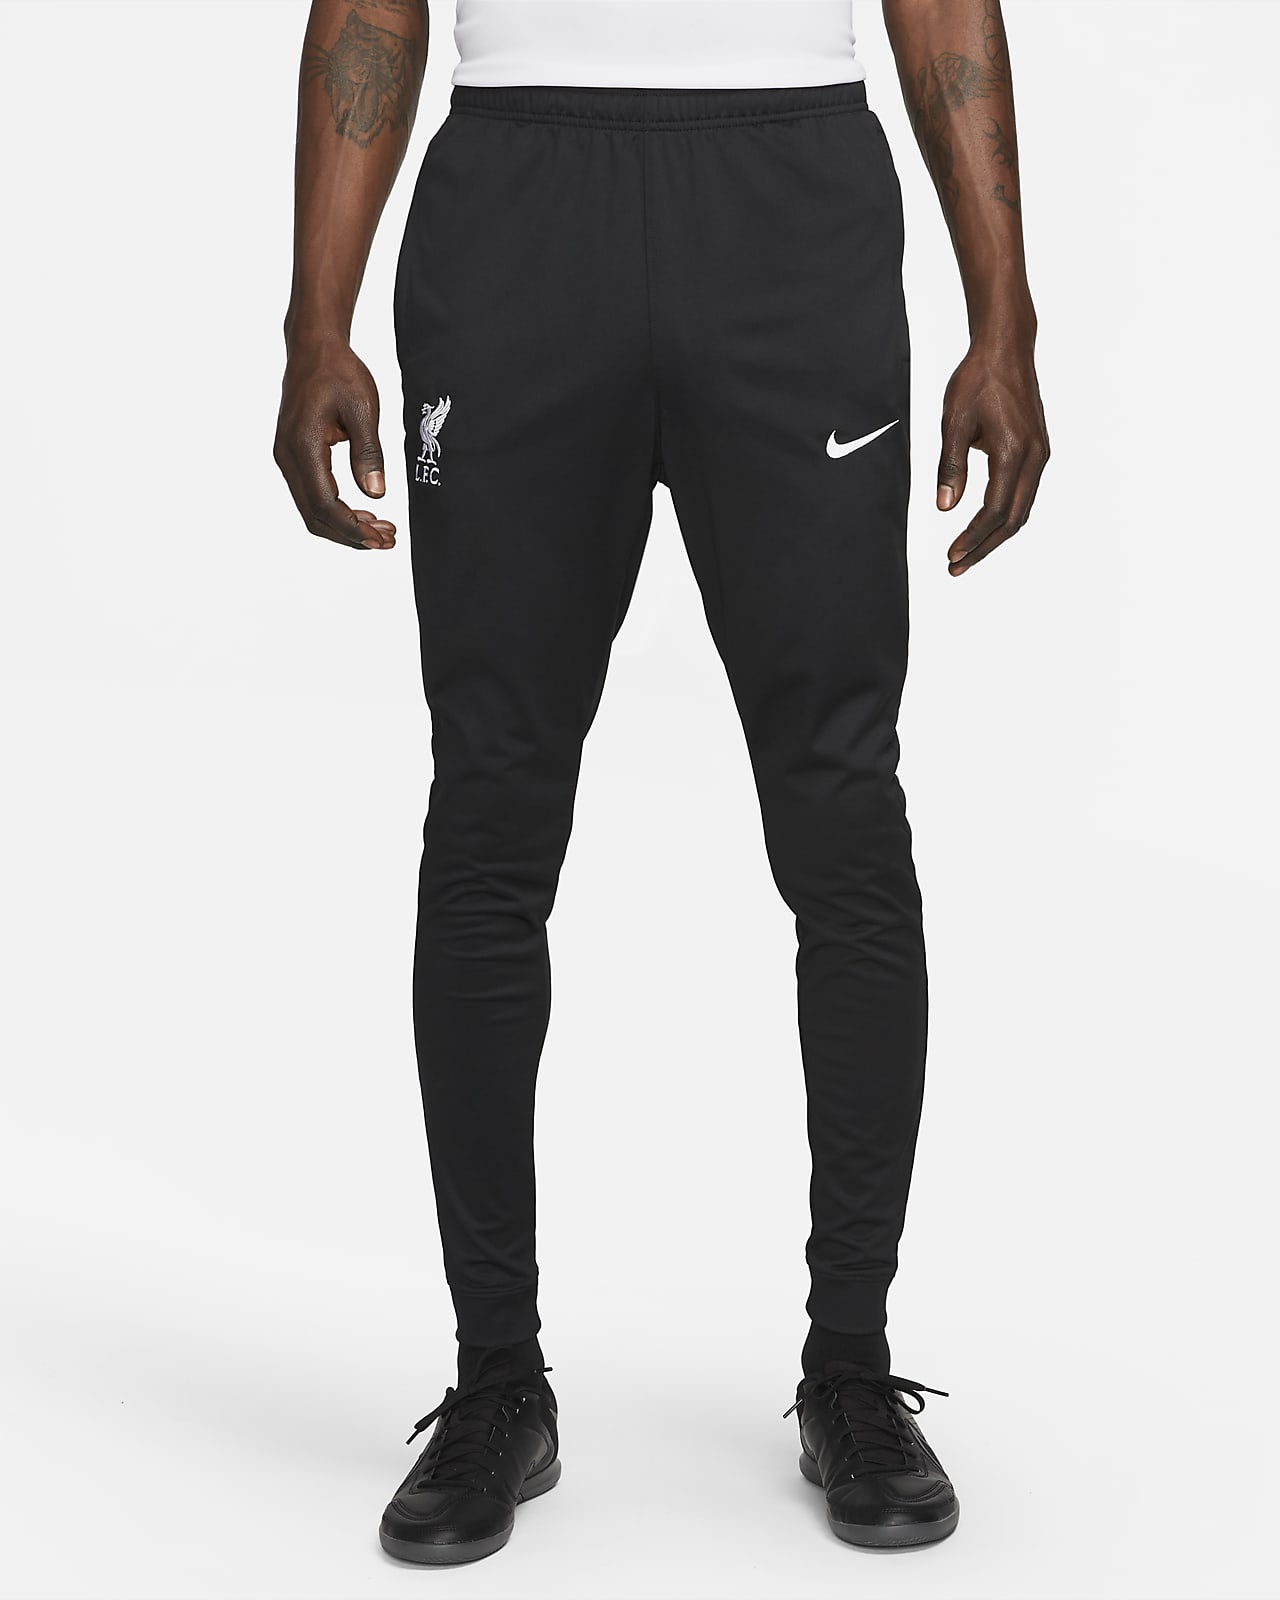 viceversa Desarrollar alcanzar Liverpool FC Strike Men's Nike Dri-FIT Soccer Track Pants. Nike JP